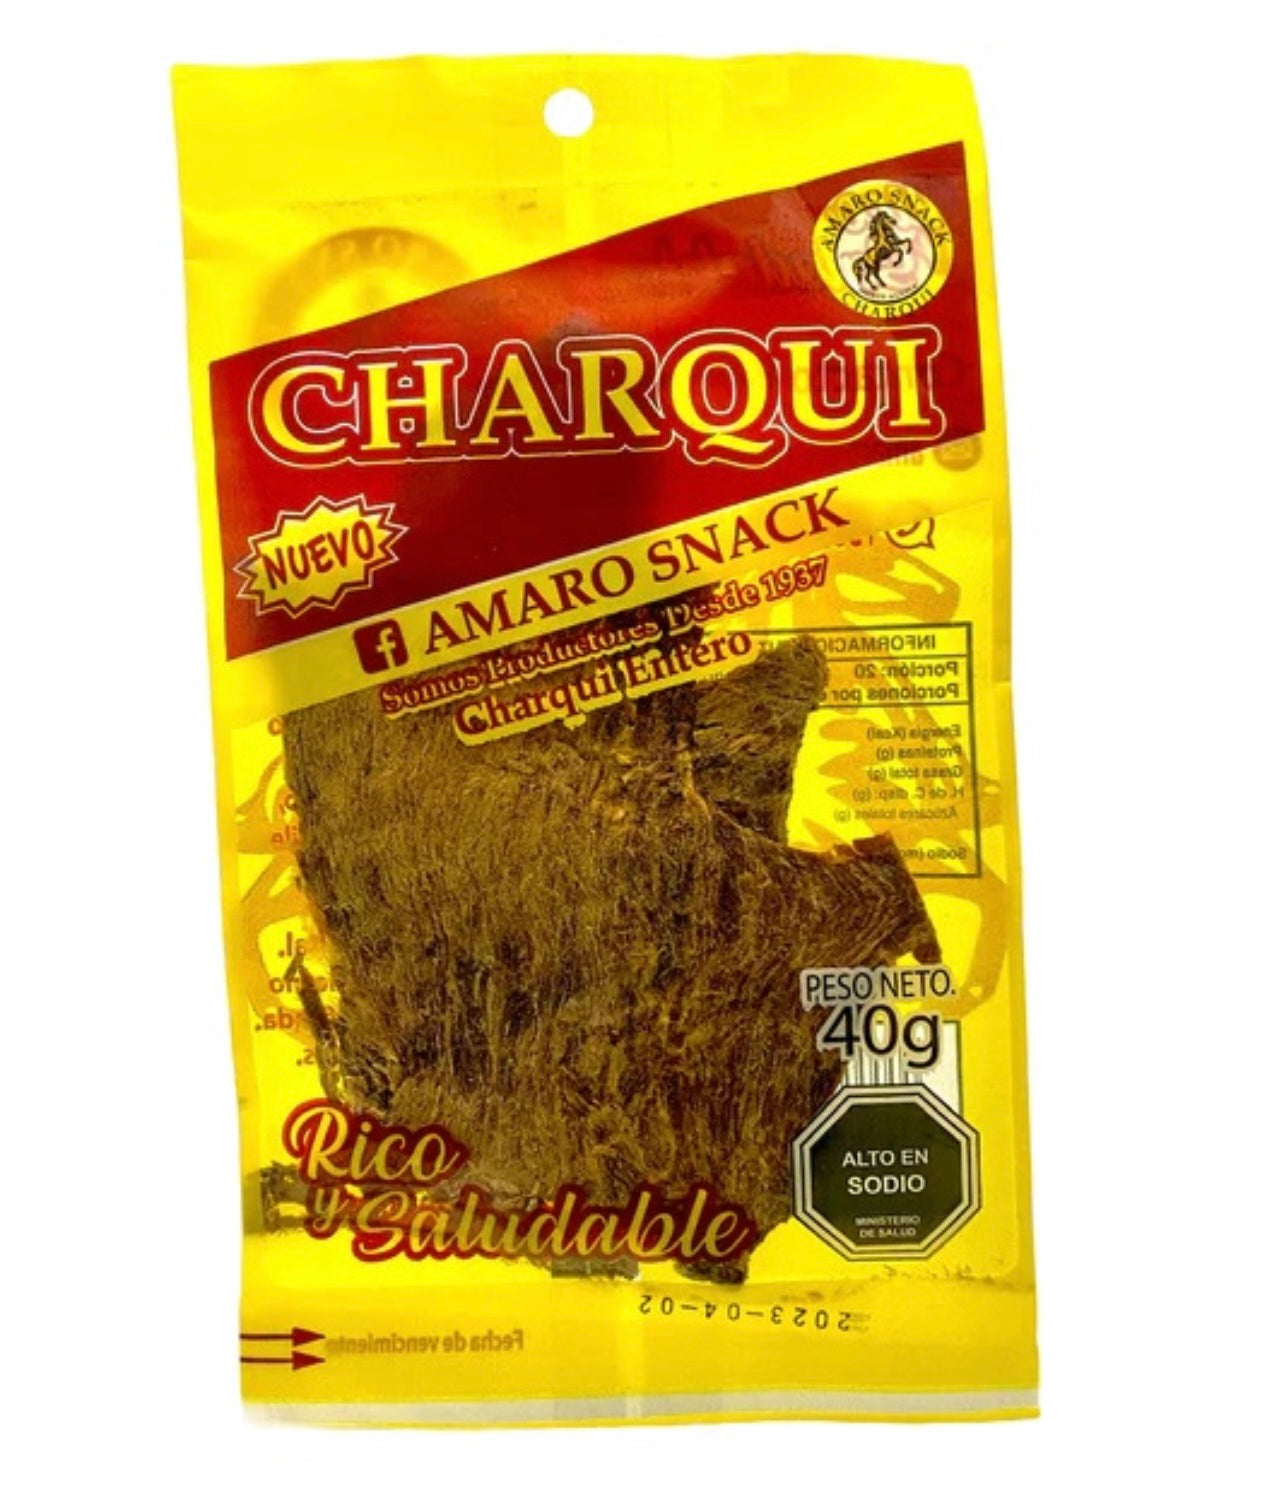 Charqui, amaro snack